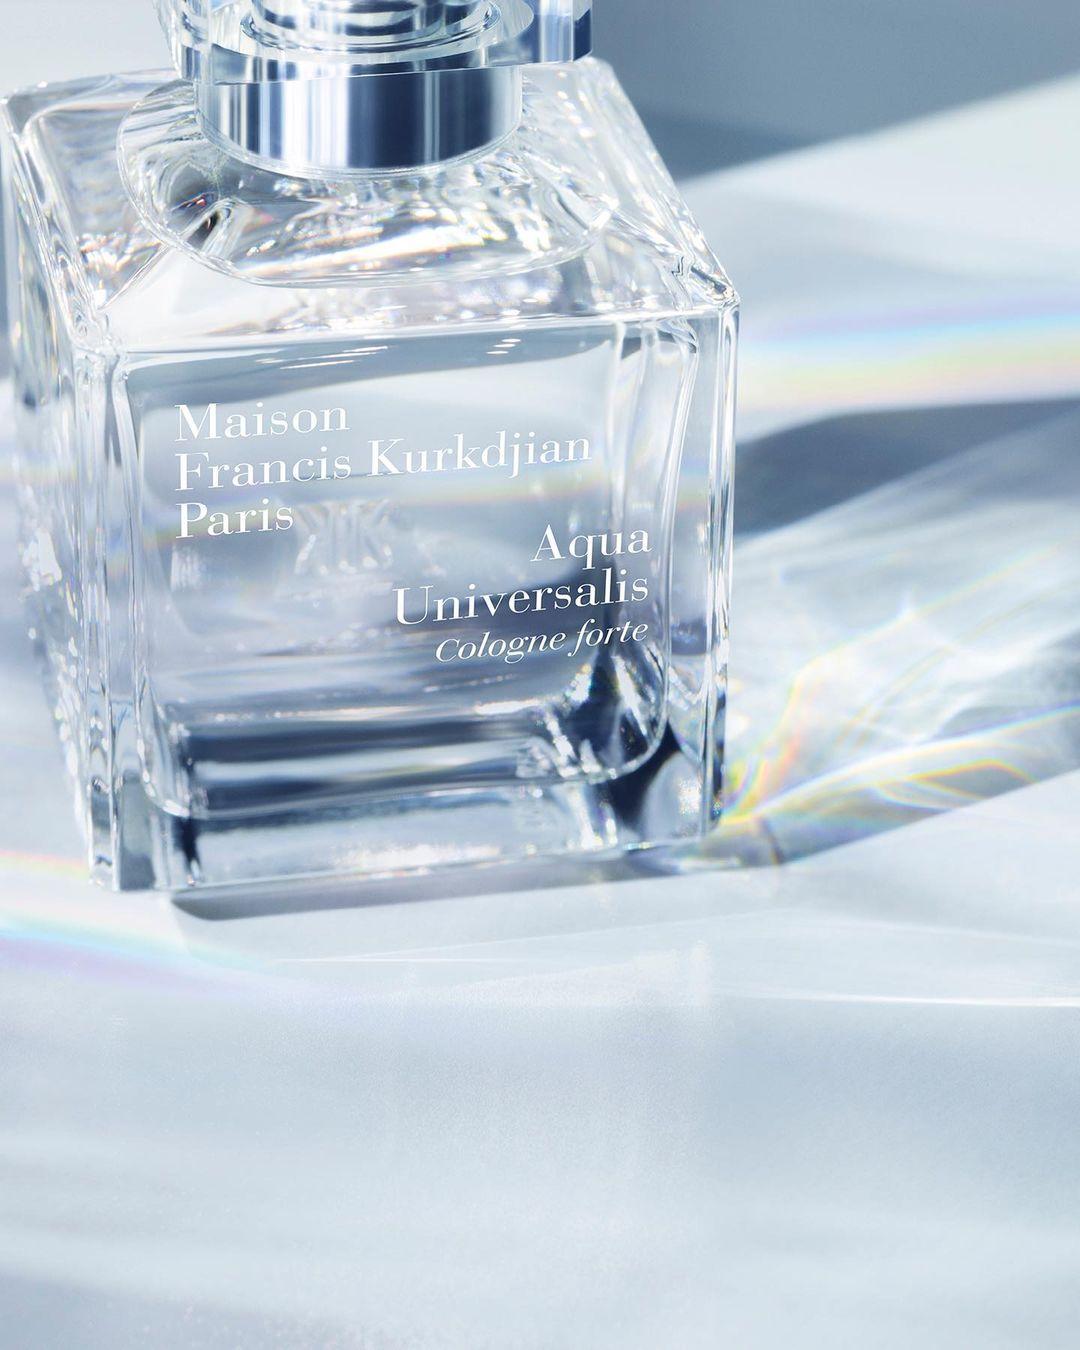 Maison Francis Kurkdjian - Aqua Universalis cologne forte | Perfume Lounge